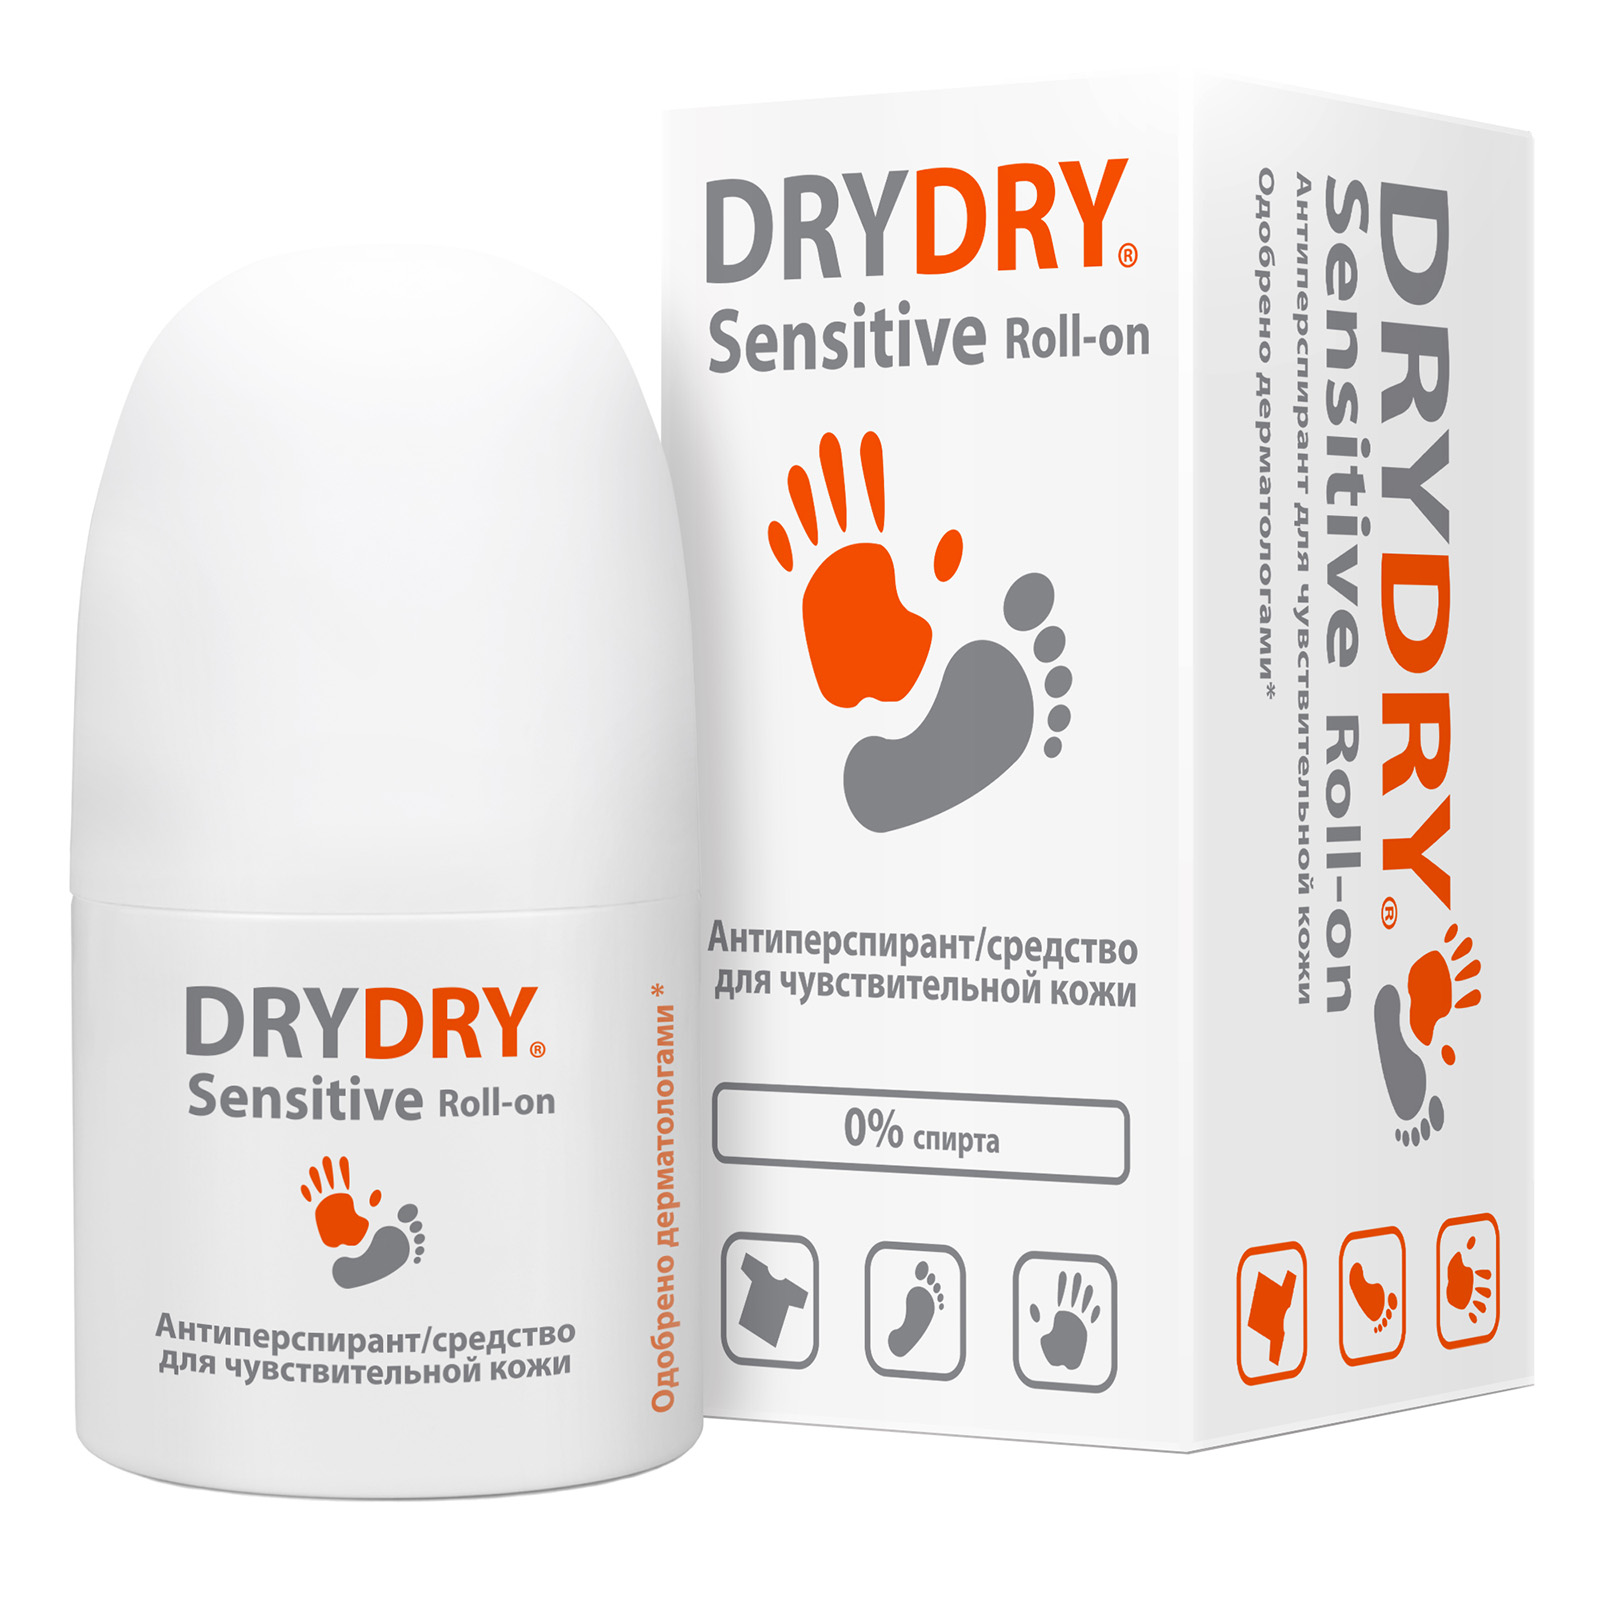 Dry Dry Средство от обильного потоотделения, 50 мл (Dry Dry, Sensitive) dry dry средство от обильного потоотделения длительного действия classic 35 мл dry dry